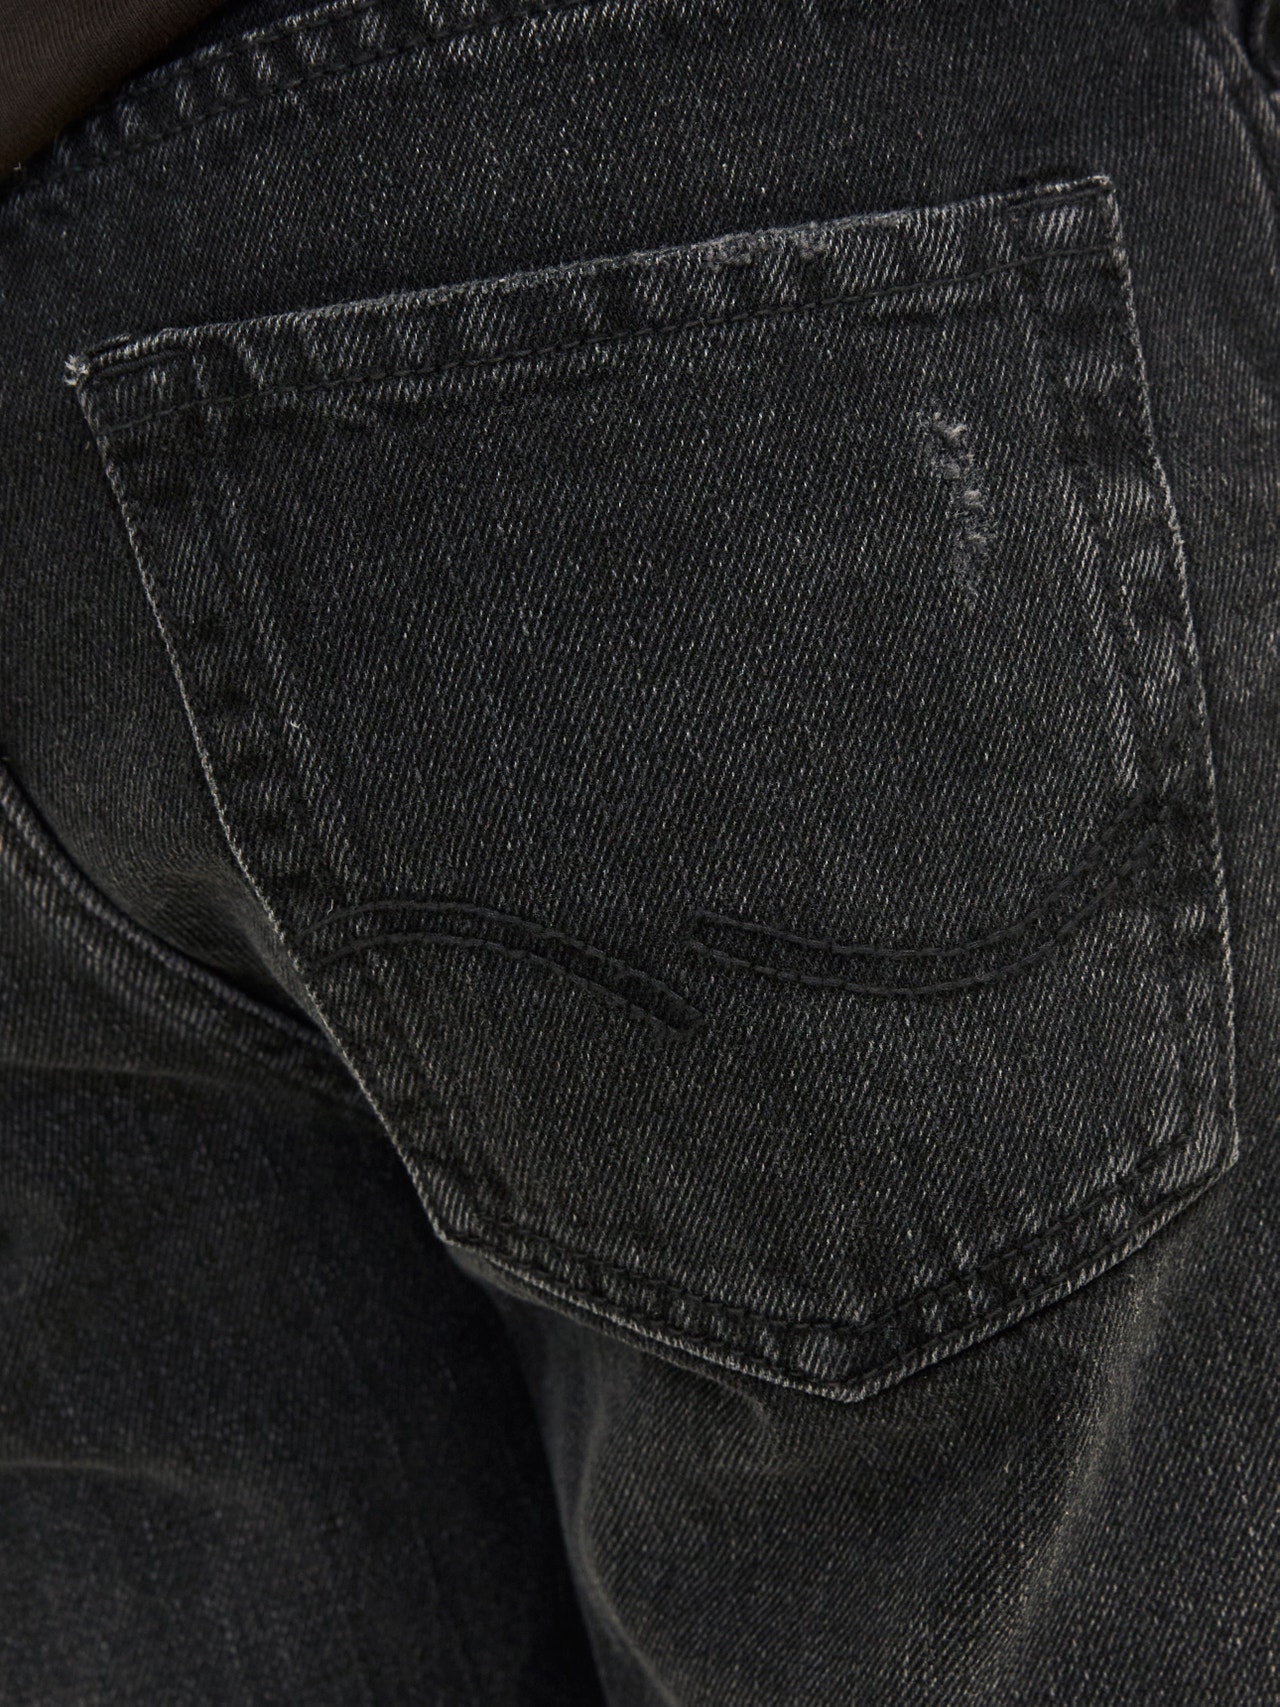 Jack & Jones Relaxed Fit Jeans-Shorts Für jungs -Black Denim - 12249232